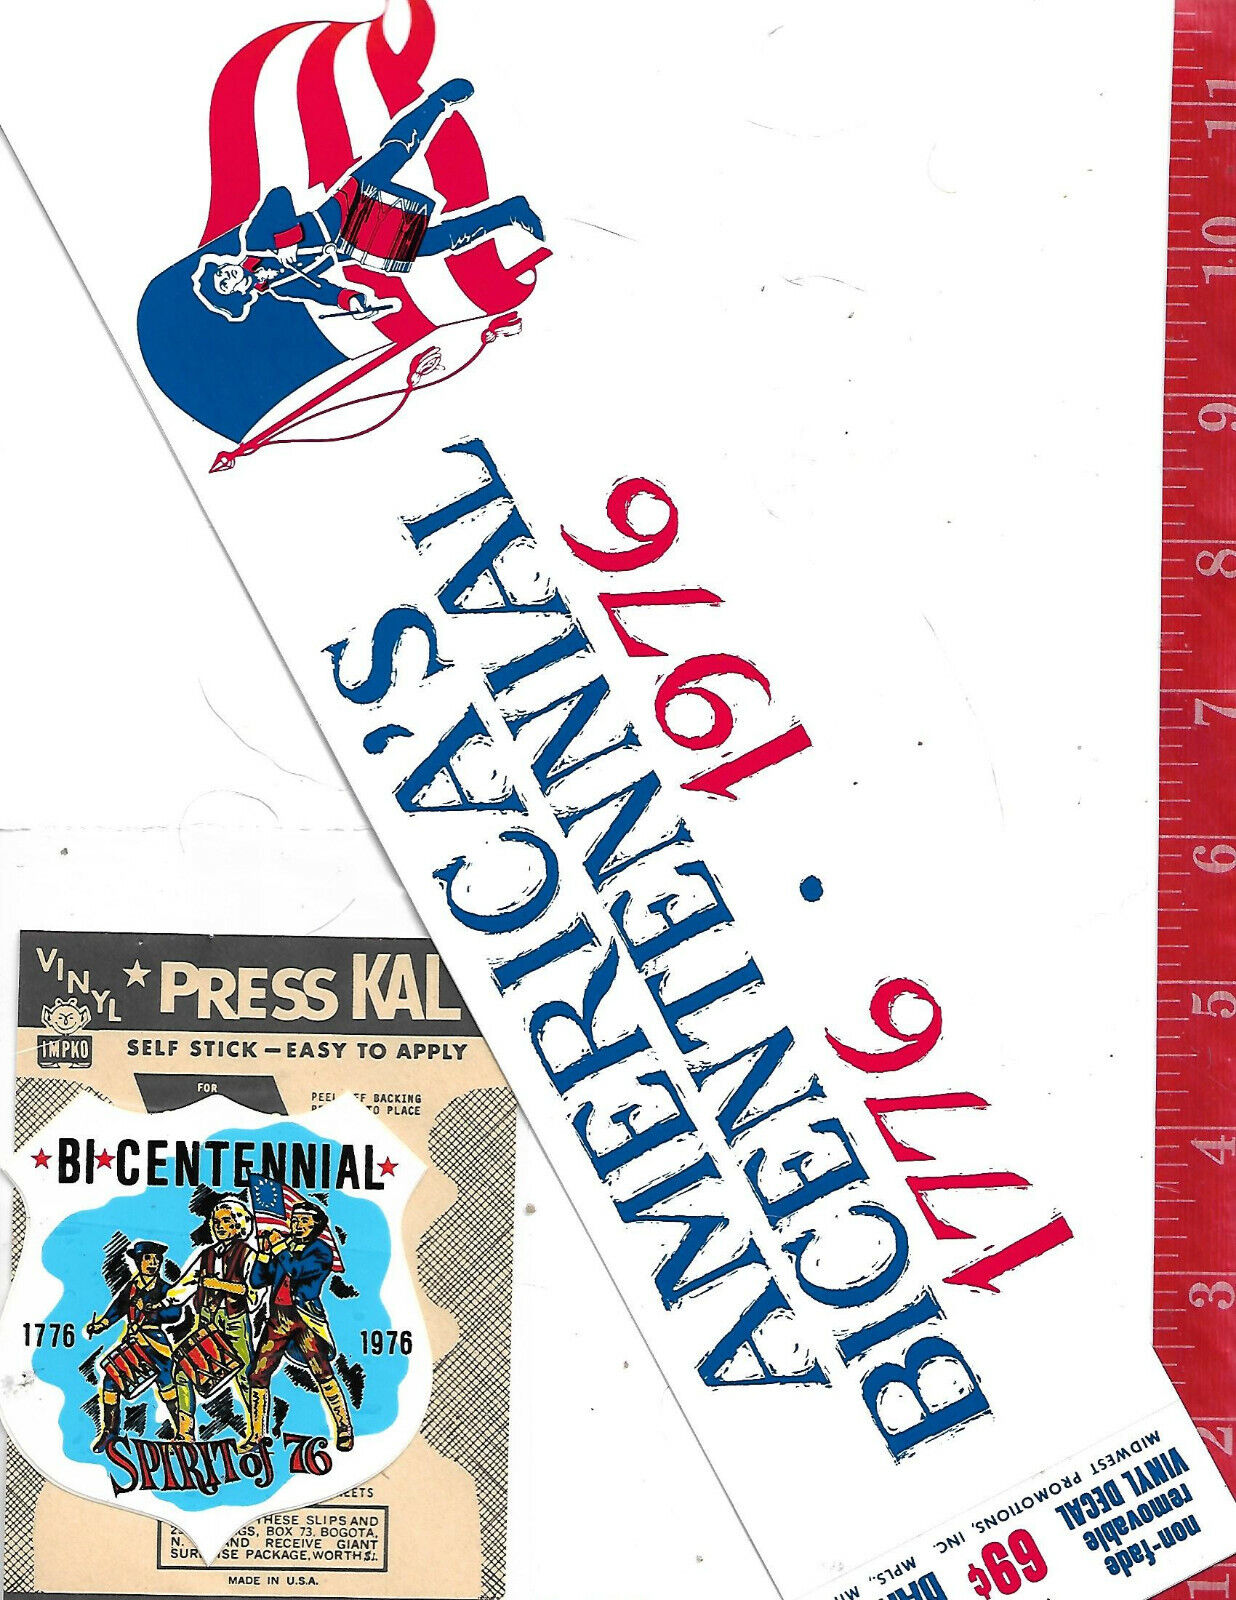 Vinyl 1976 bicentenial Bumper sticker and vinyl Press Kal sticker never used #4